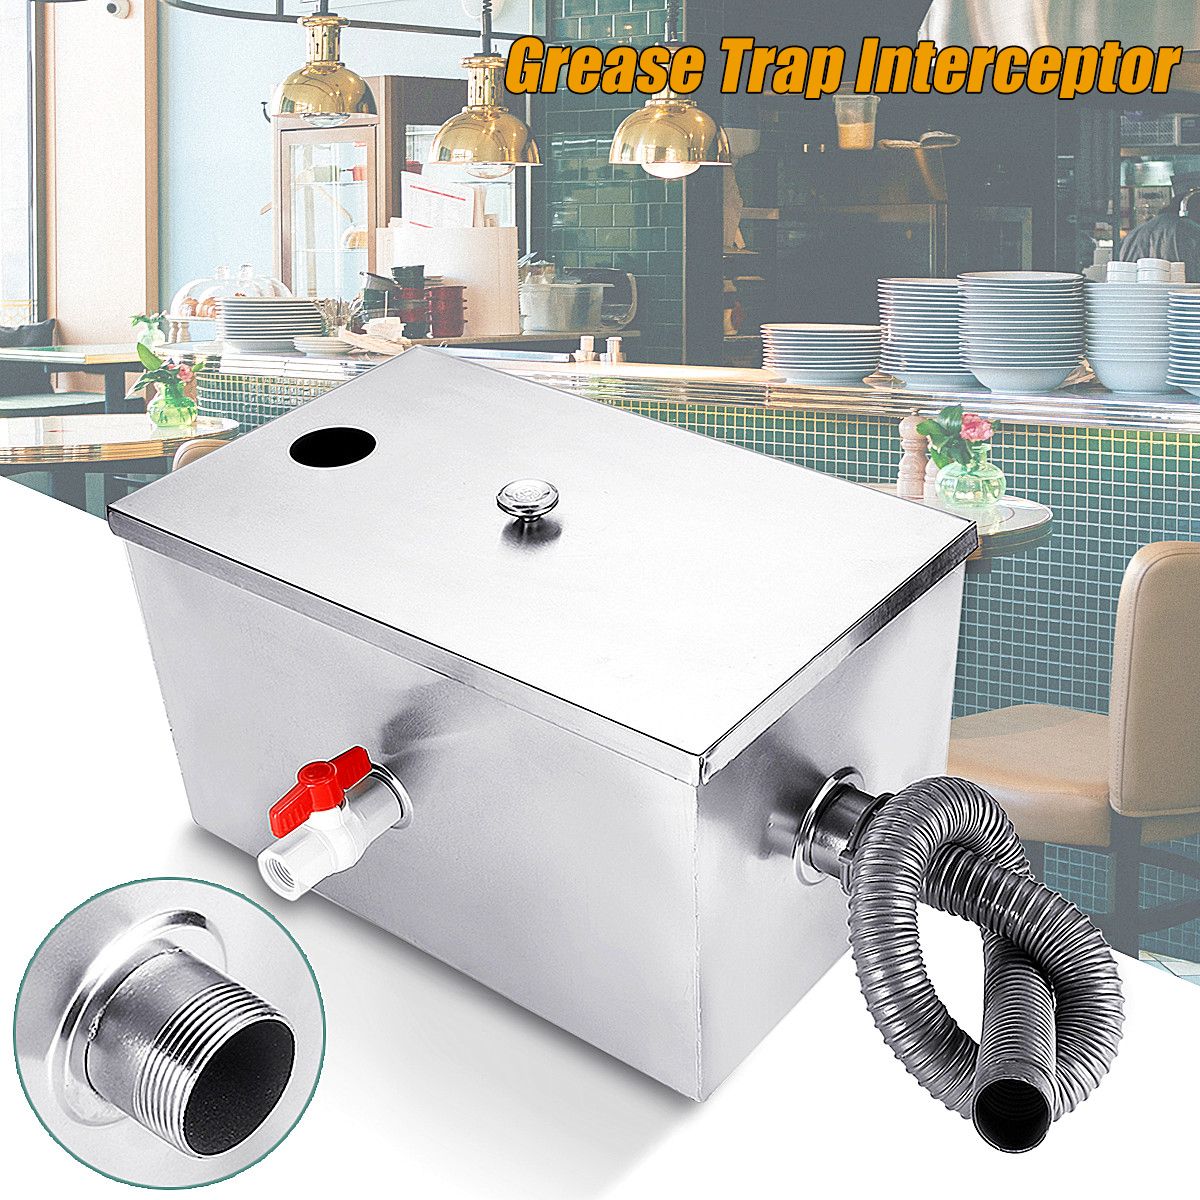 5GPM-Stainless-Steel-Grease-Trap-Interceptor-Set-Restaurant-For-Kitchen-Wastewater-1361894